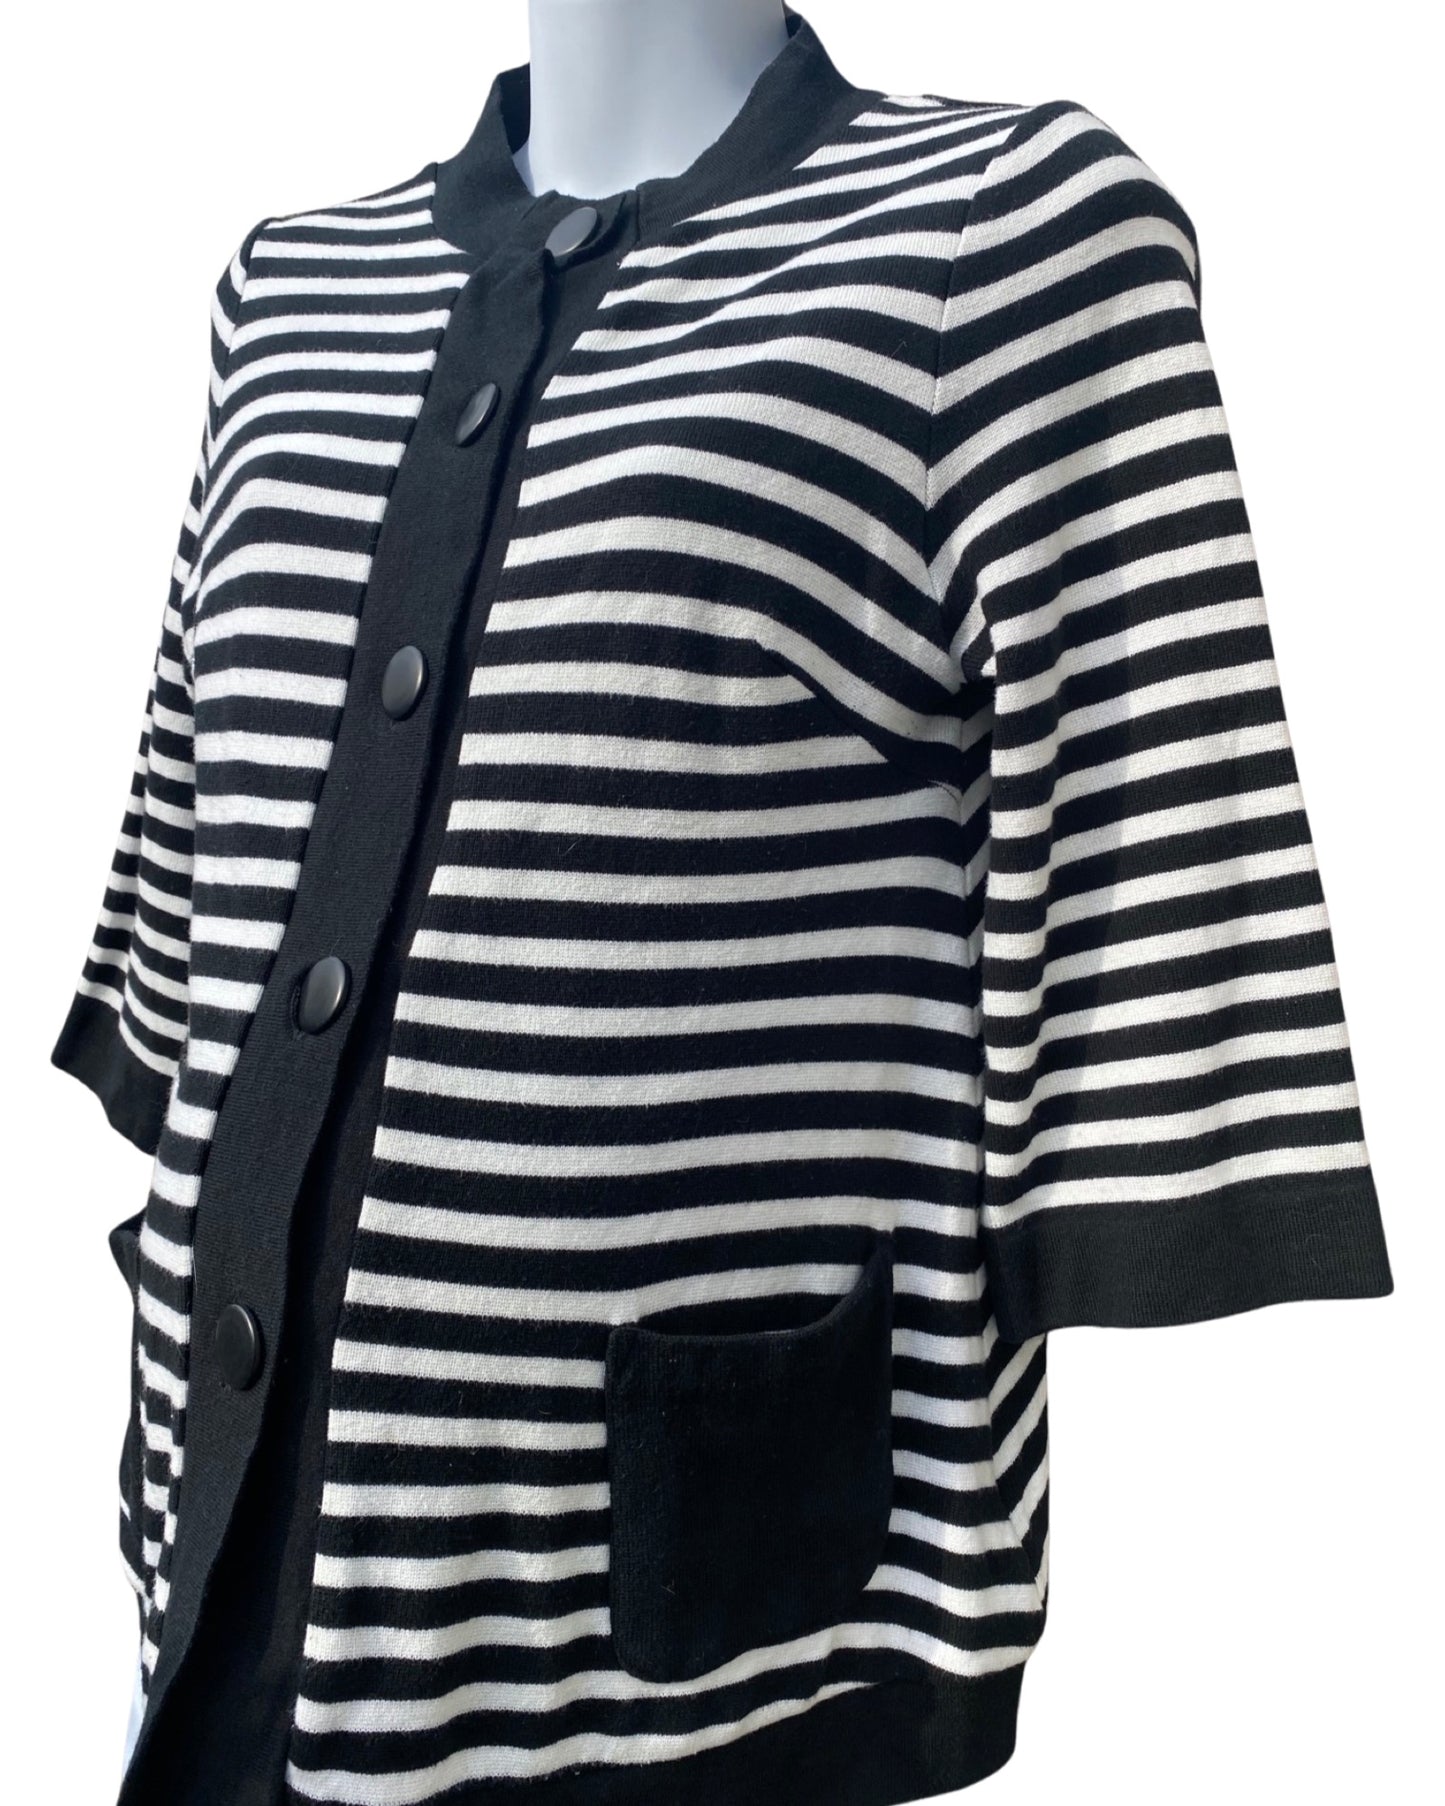 H&M Mama striped cardigan (size S)